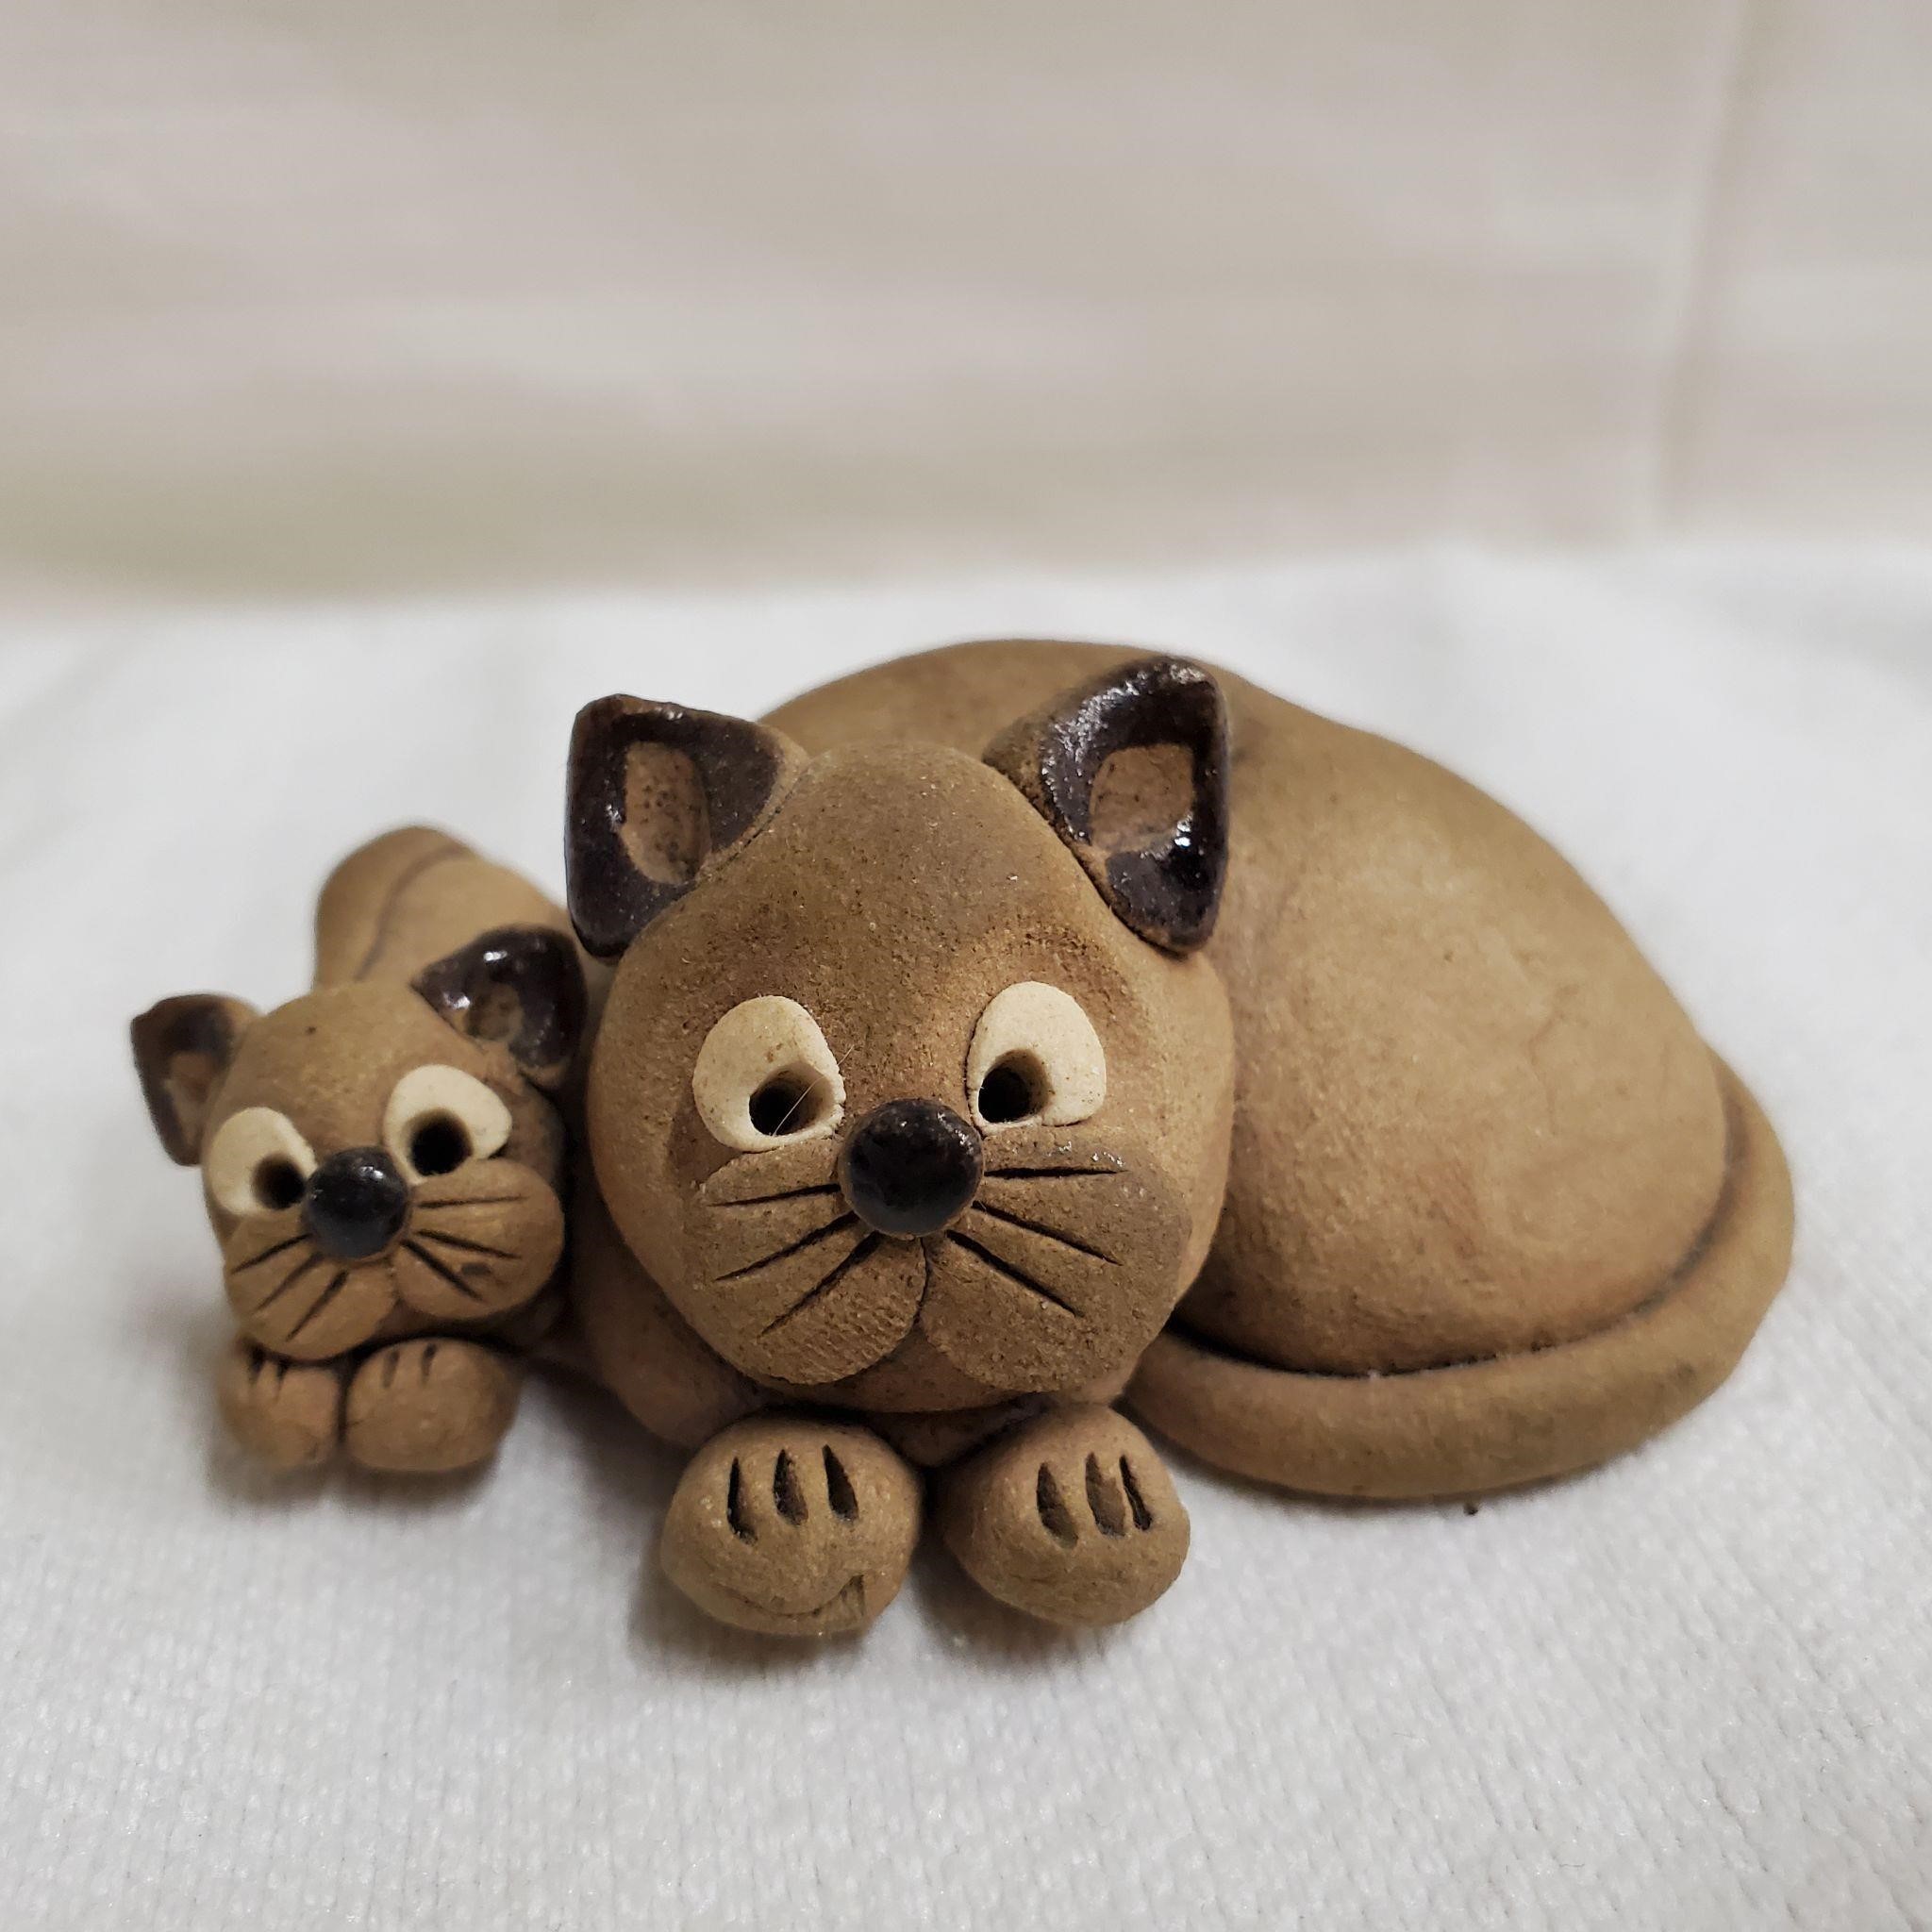 Cat and kitten figurine